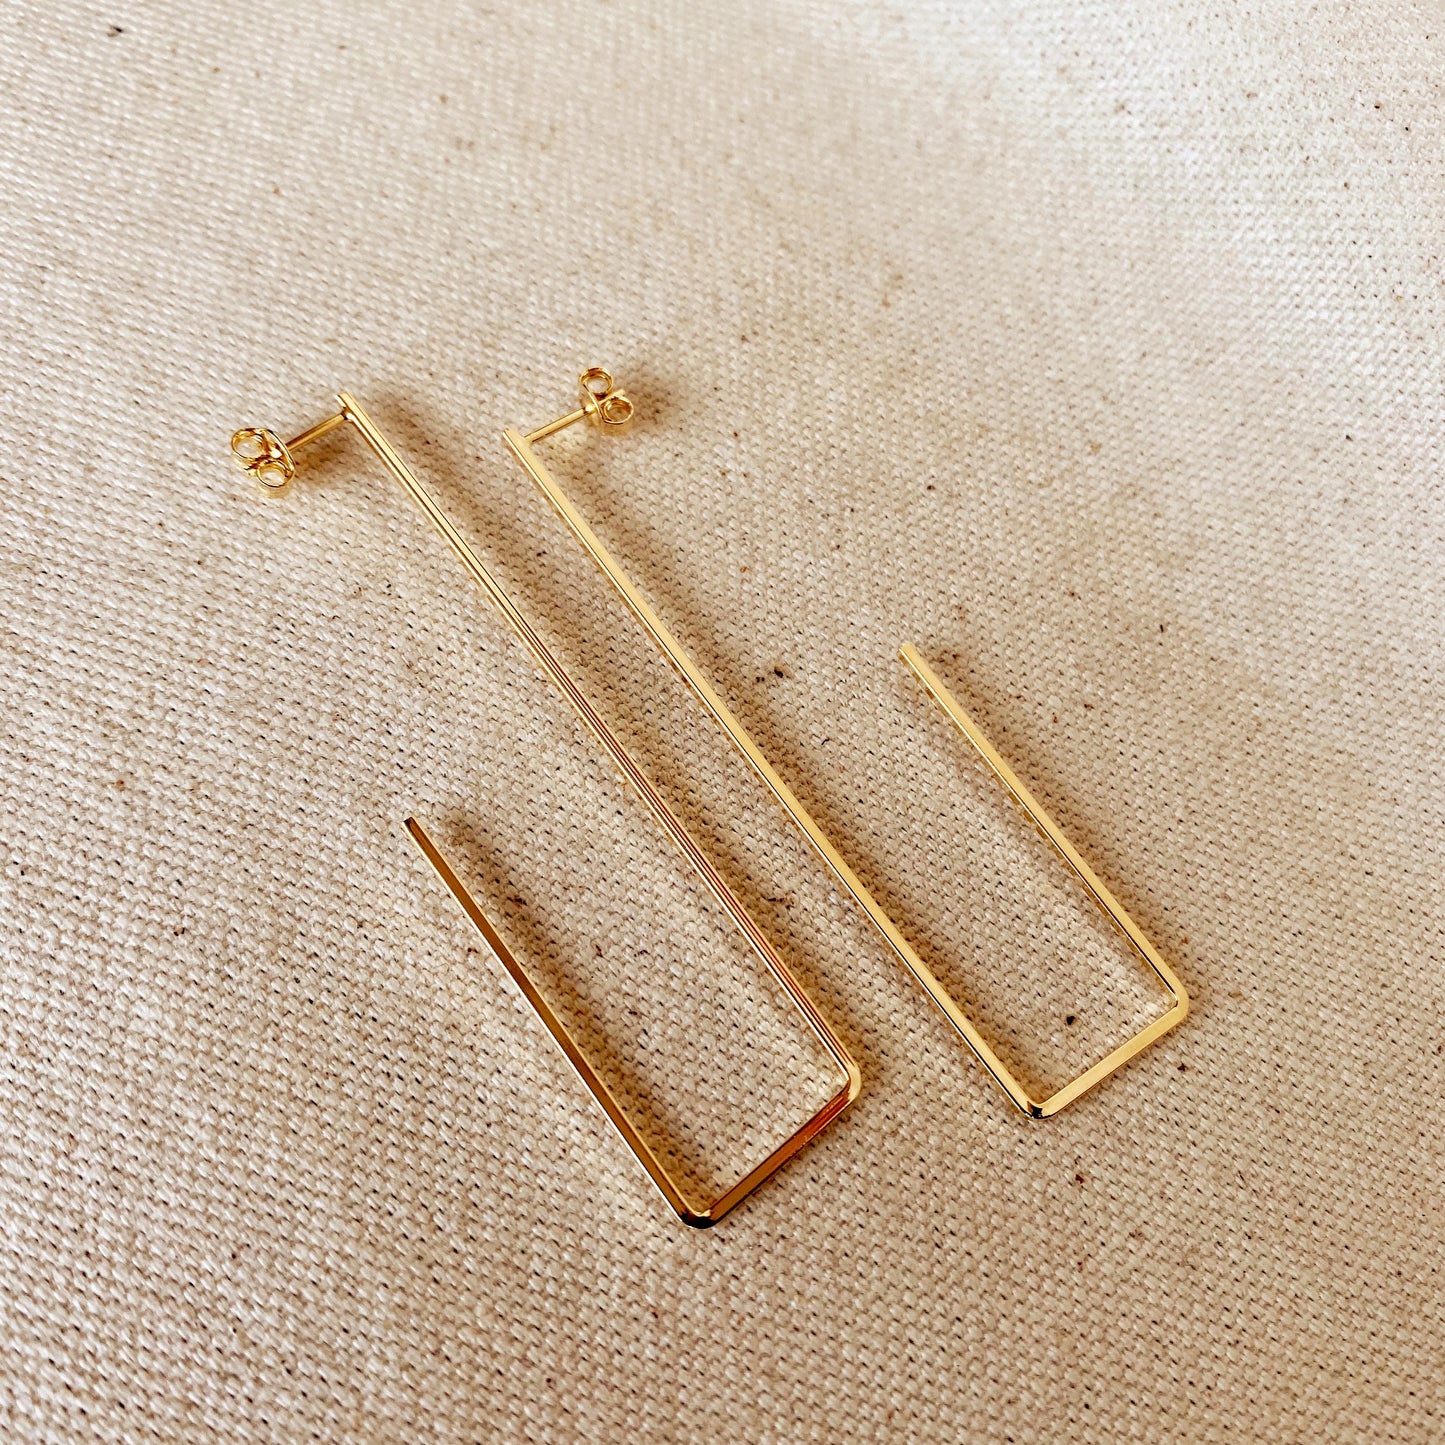 GoldFi 18k Gold Filled Rectangle Shaped Earrings